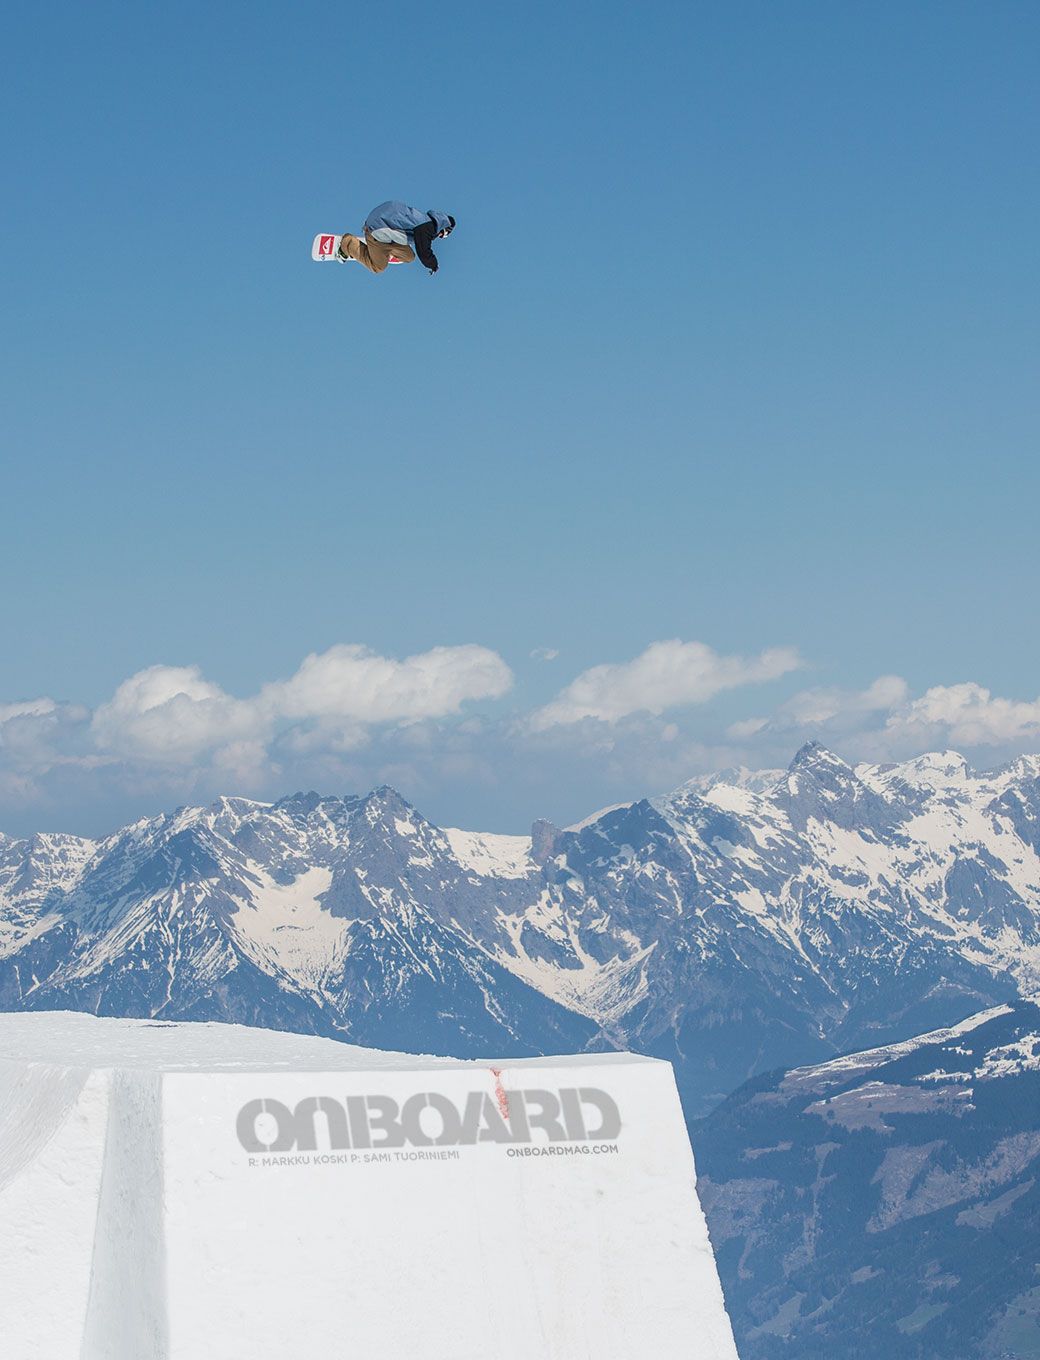 Markku Koski Backside Air | 19 Sick Snowboard Wallpapers For Your ...